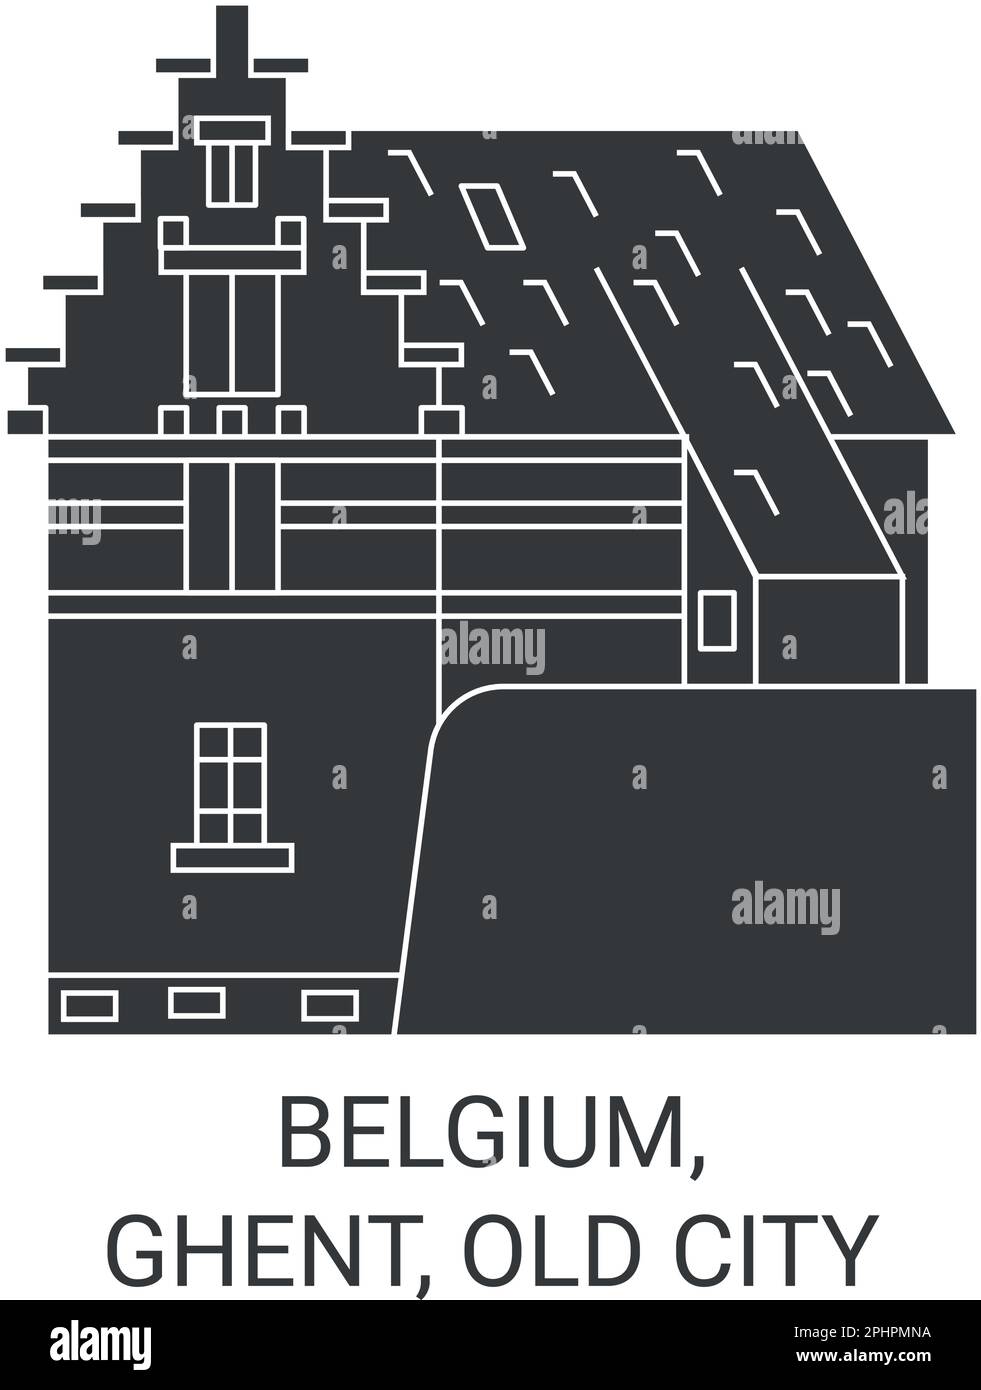 Belgium, Ghent, Old City travel landmark vector illustration Stock Vector